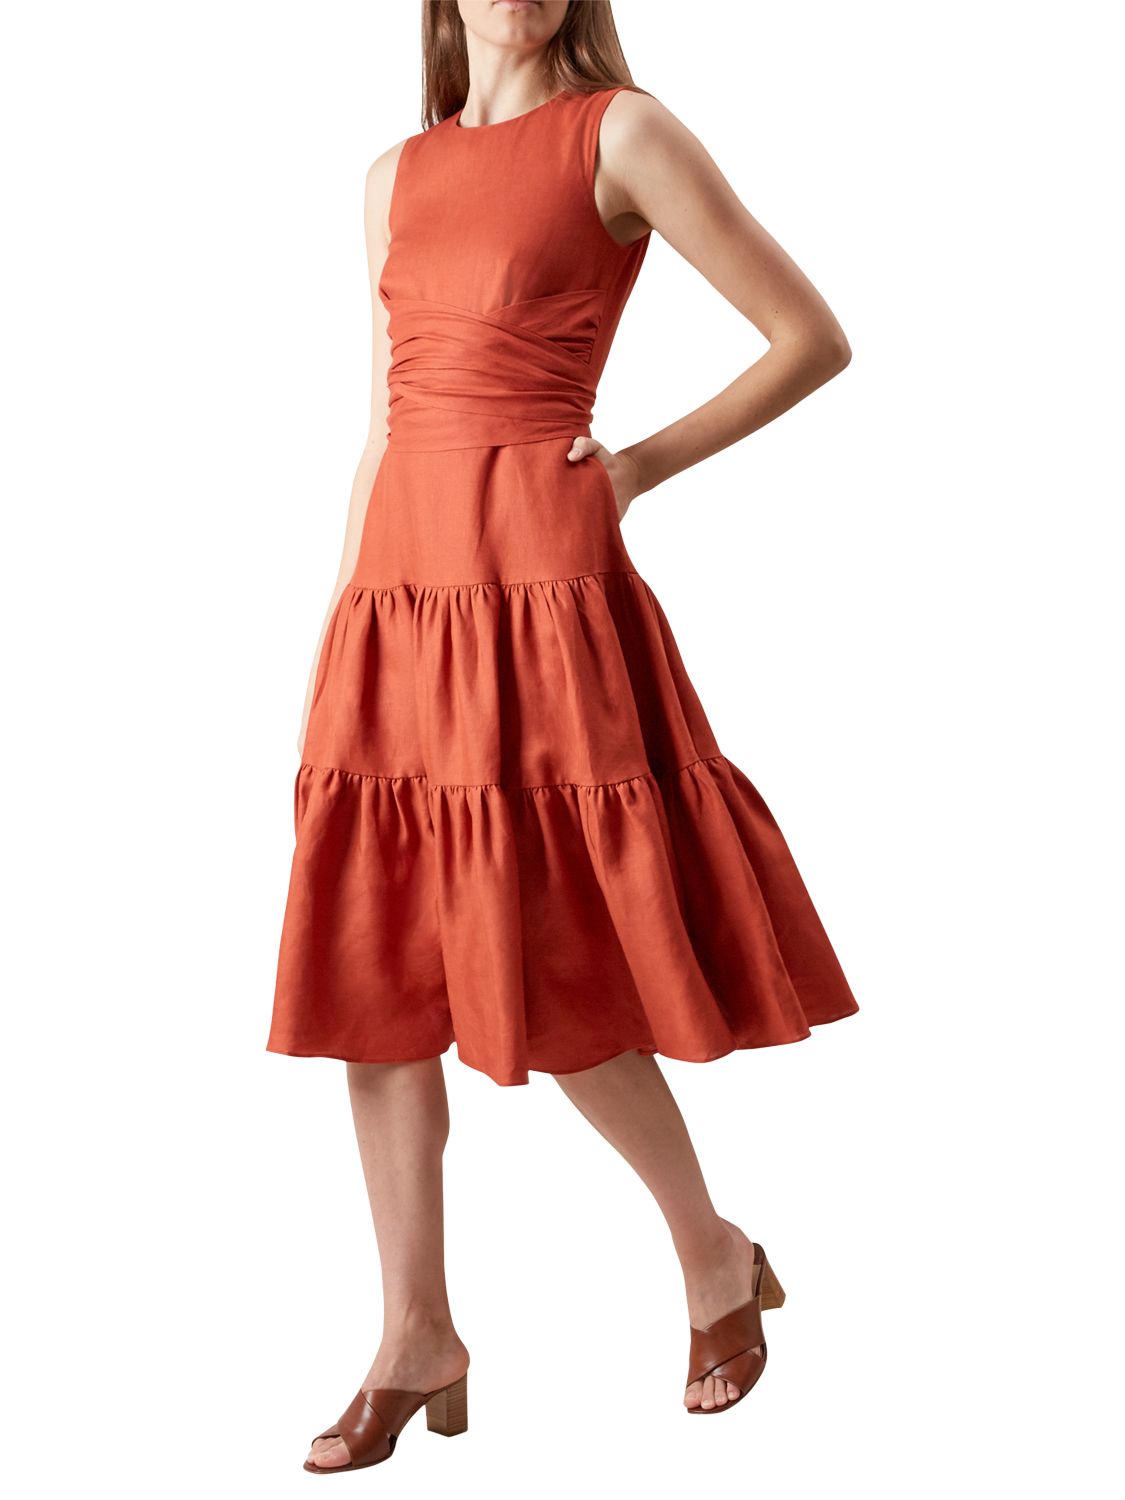 Hobbs Seville Dress, Cayenne Red, 16